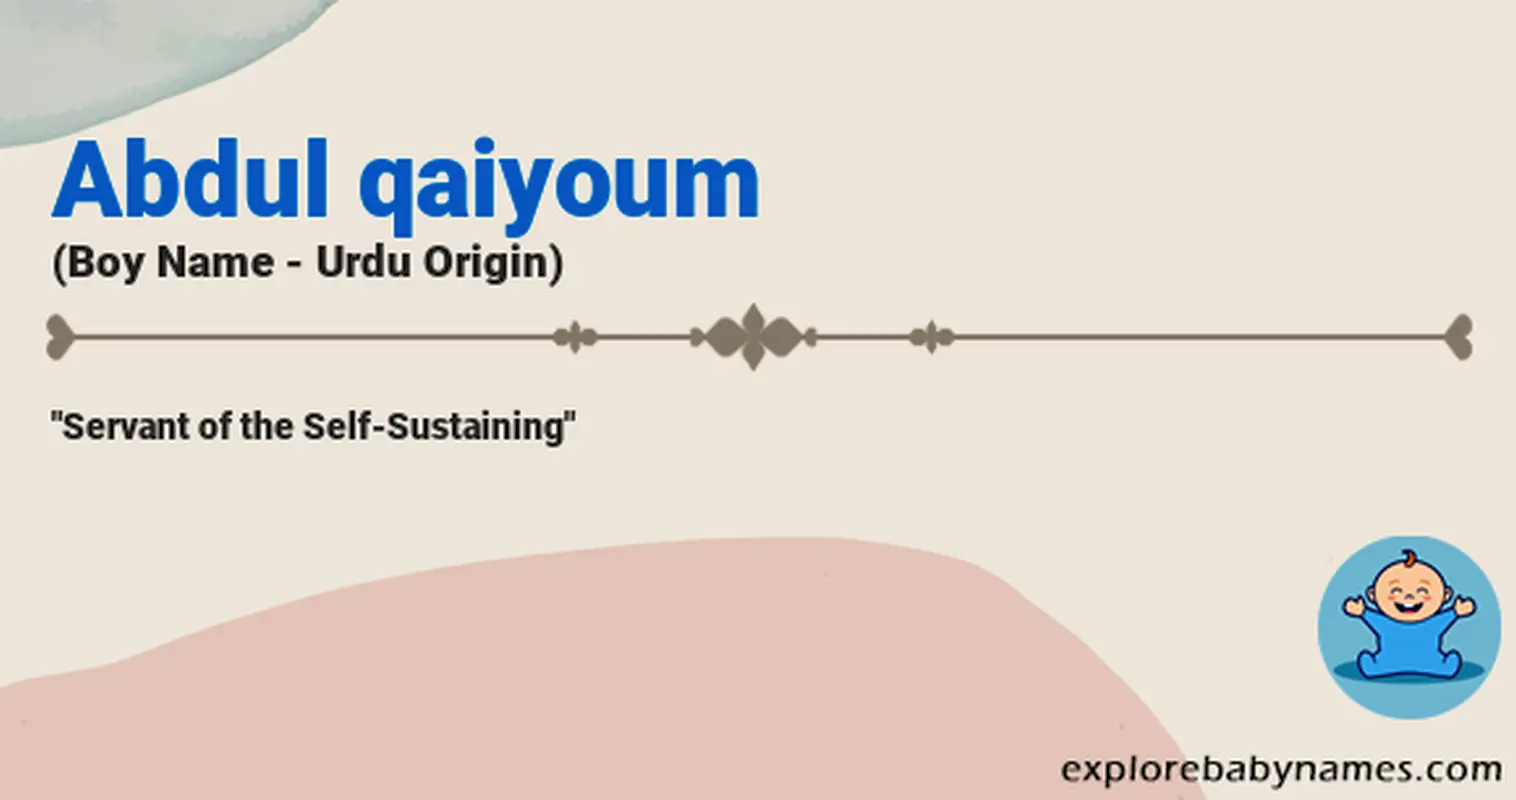 Meaning of Abdul qaiyoum